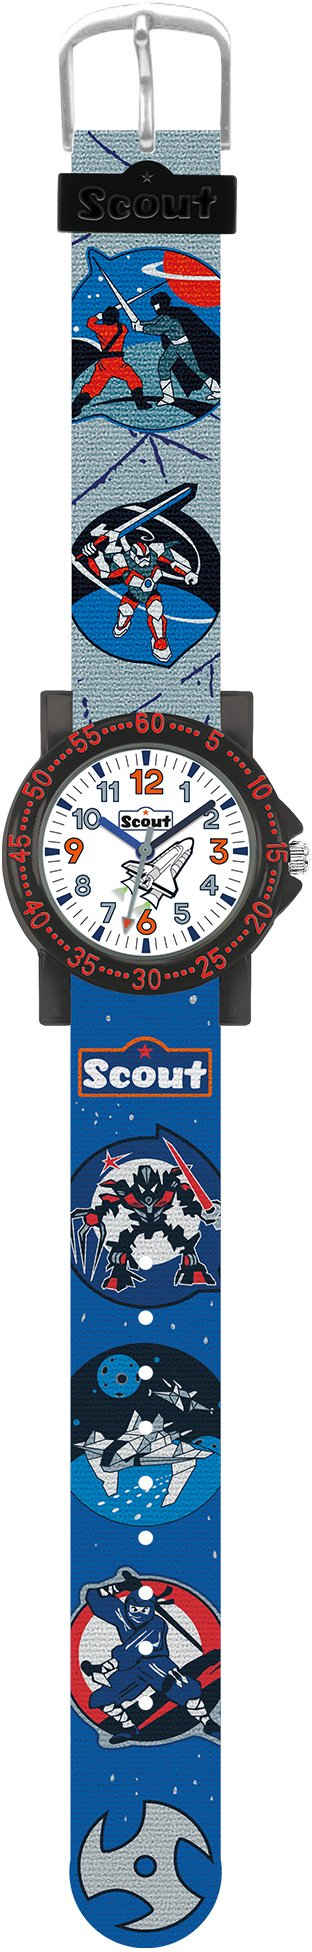 Scout Quarzuhr The IT-Collection, 280375026, Lernuhr, ideal auch als Geschenk